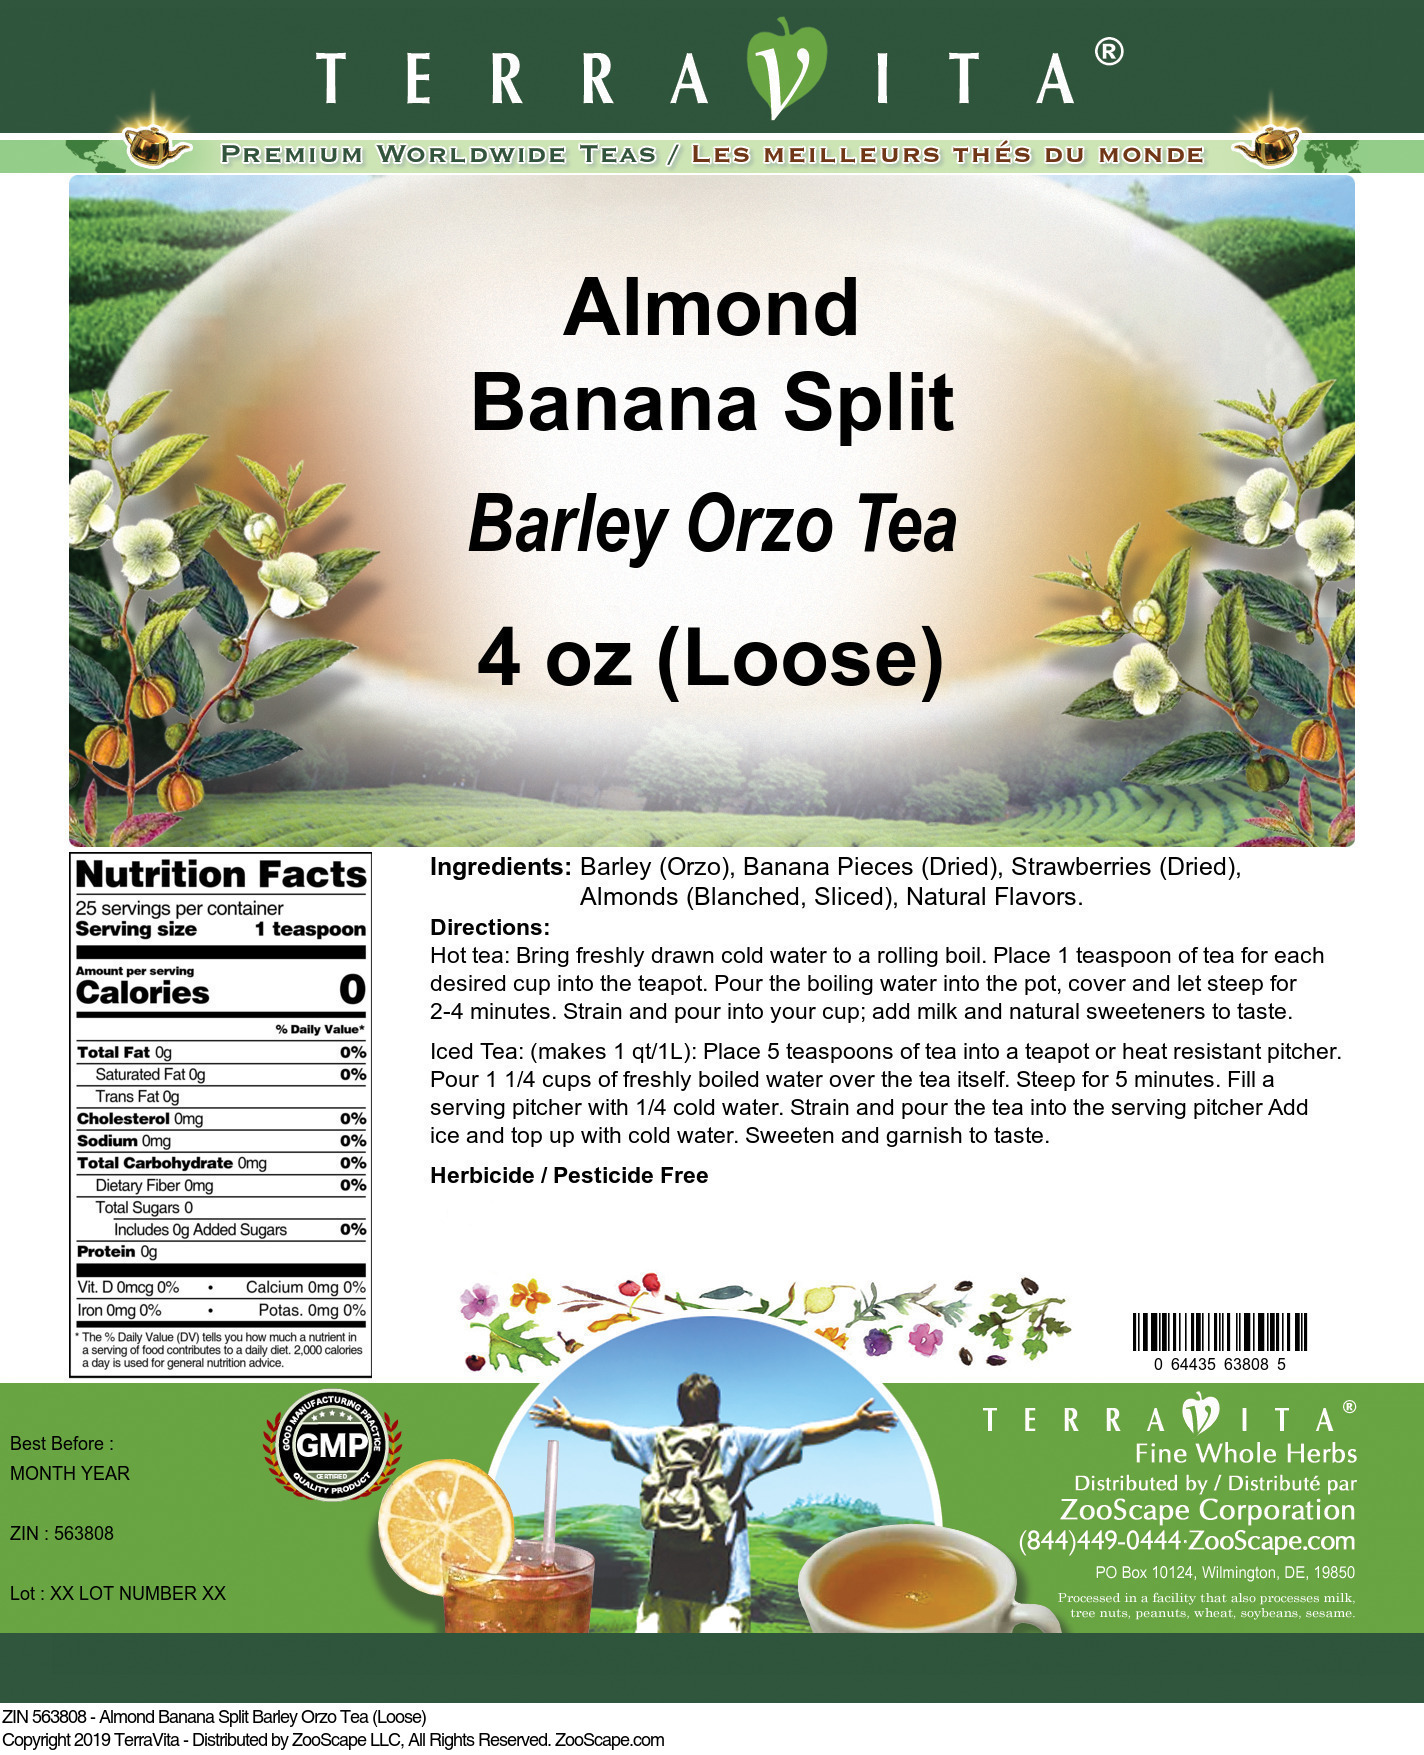 Almond Banana Split Barley Orzo Tea (Loose) - Label